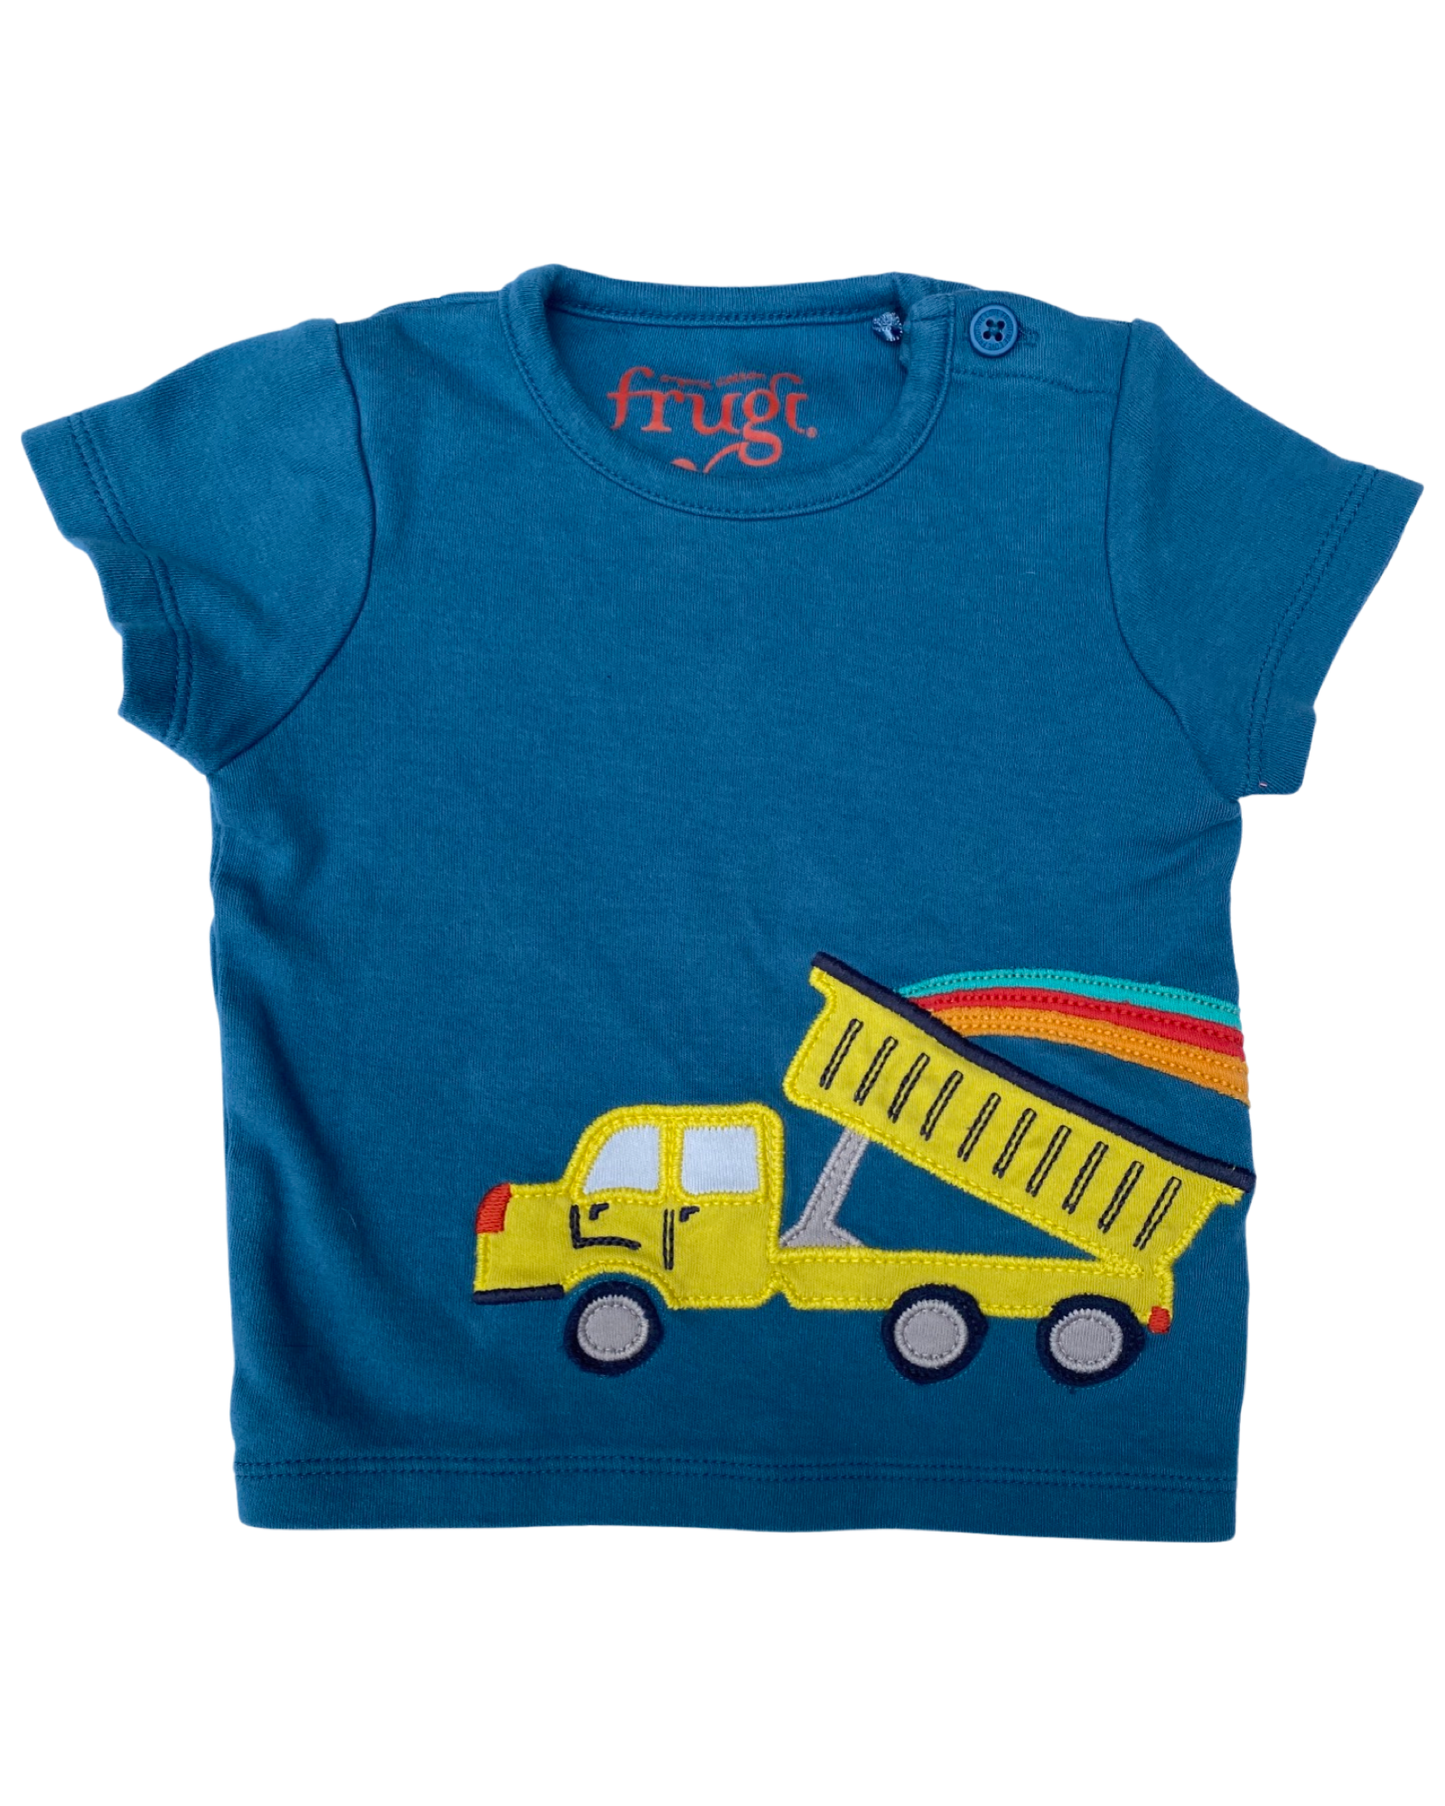 Frugi rainbow dumptruck t shirt ( size 3-6mths)